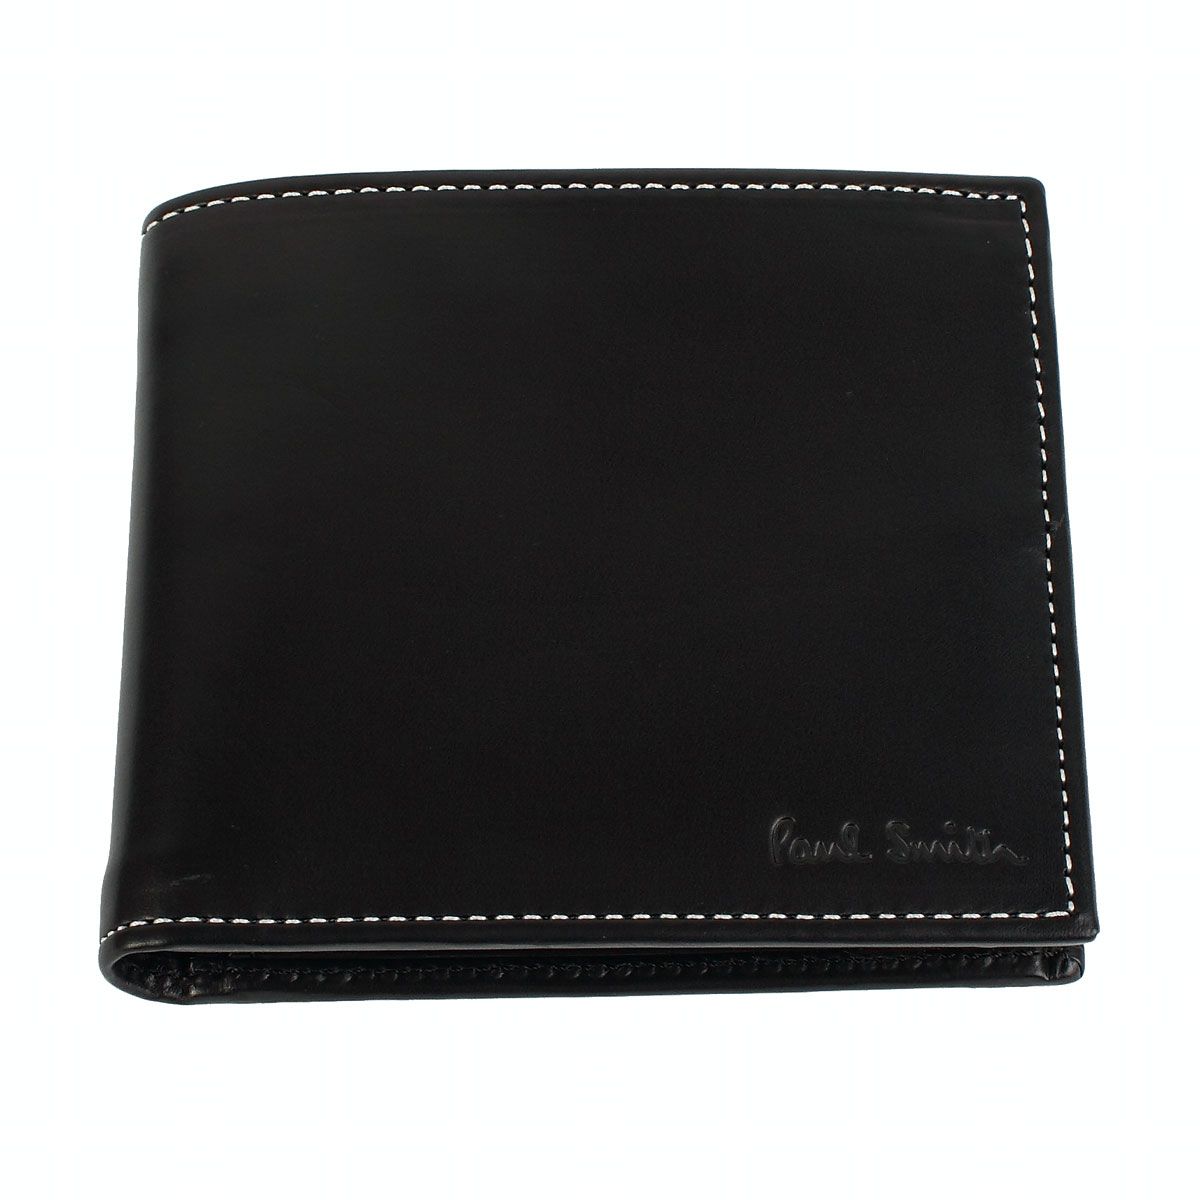 Foto Paul Smith Accessories Black Leather Wallet foto 67770